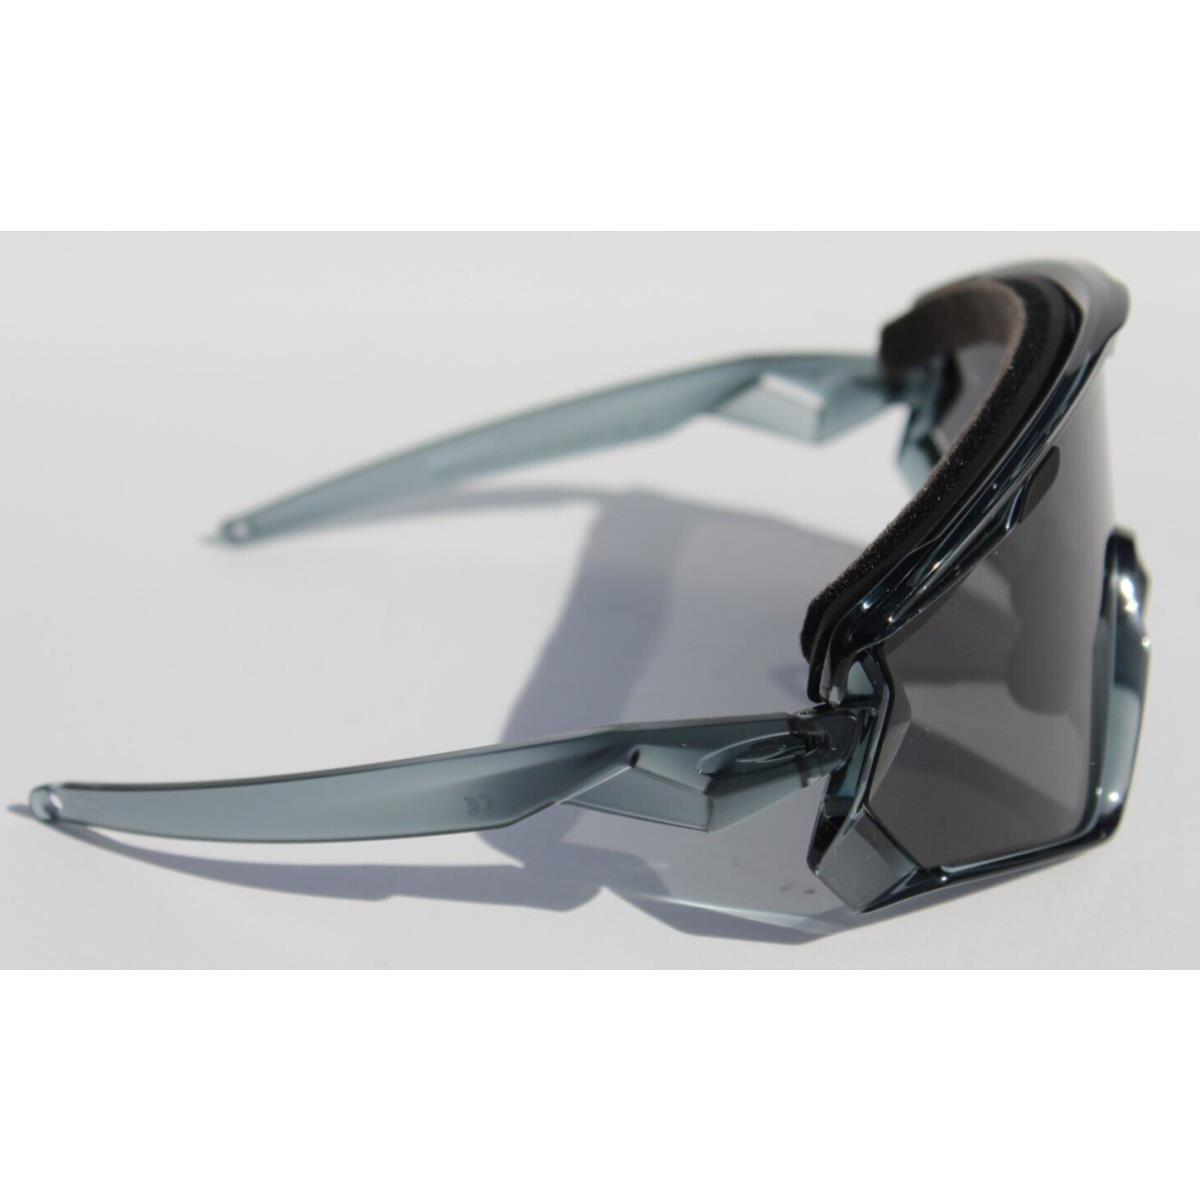 Oakley sunglasses Wind Jacket - Black Frame, Gray Lens